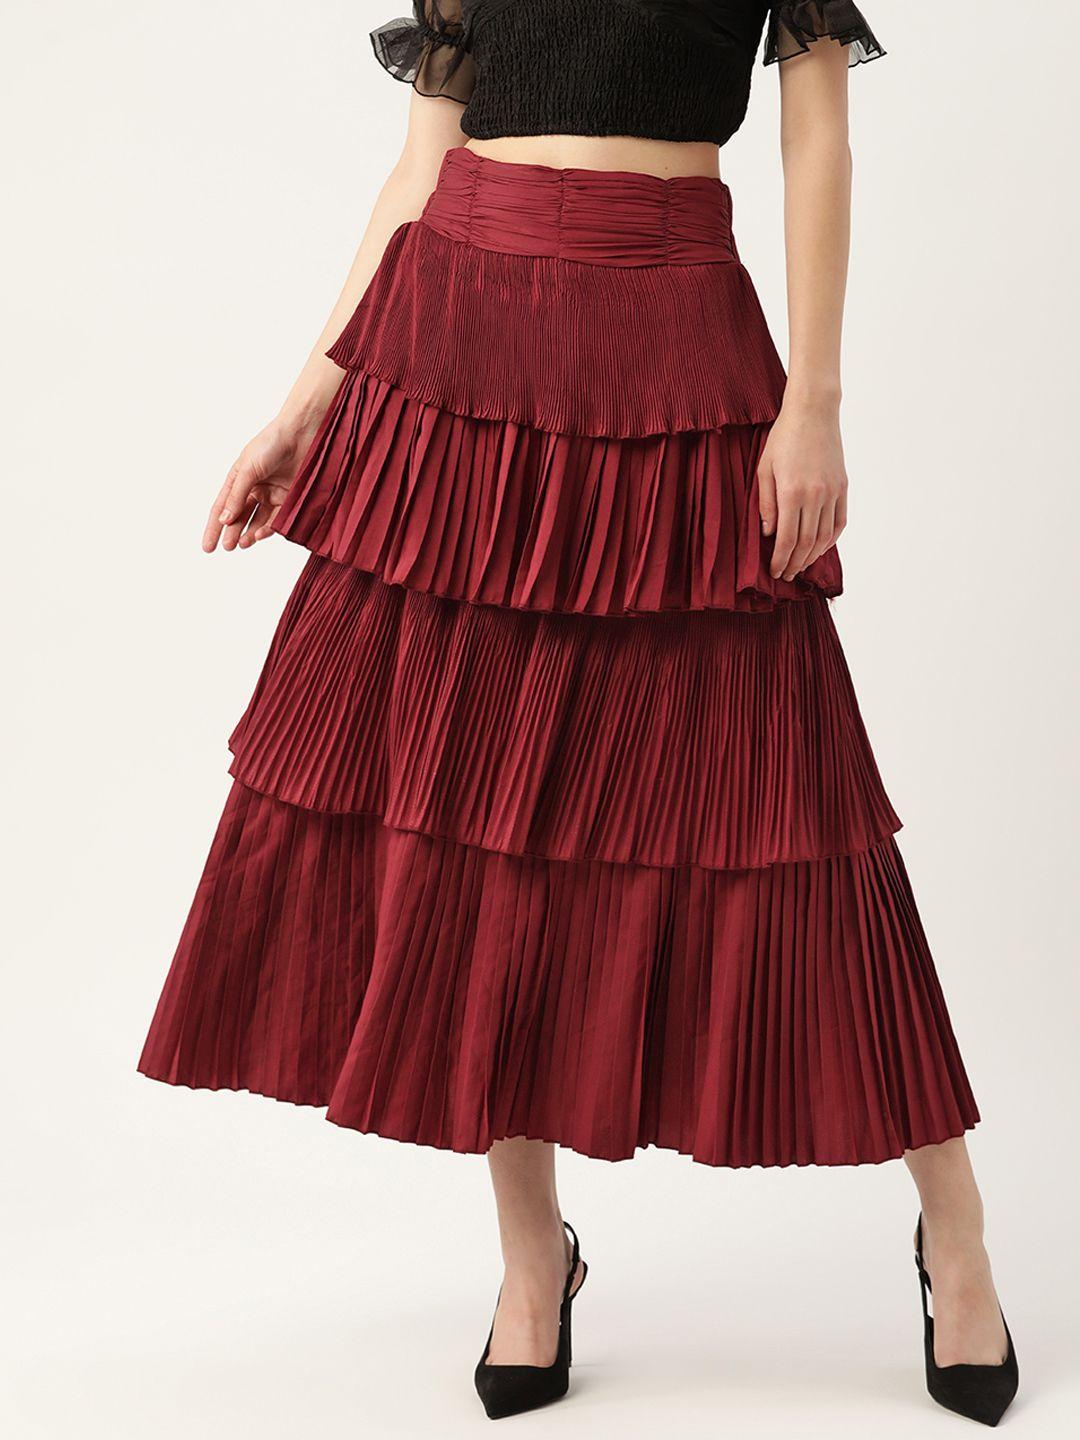 antheaa-women-maroon-solid-accordion-pleated-layered-skirt